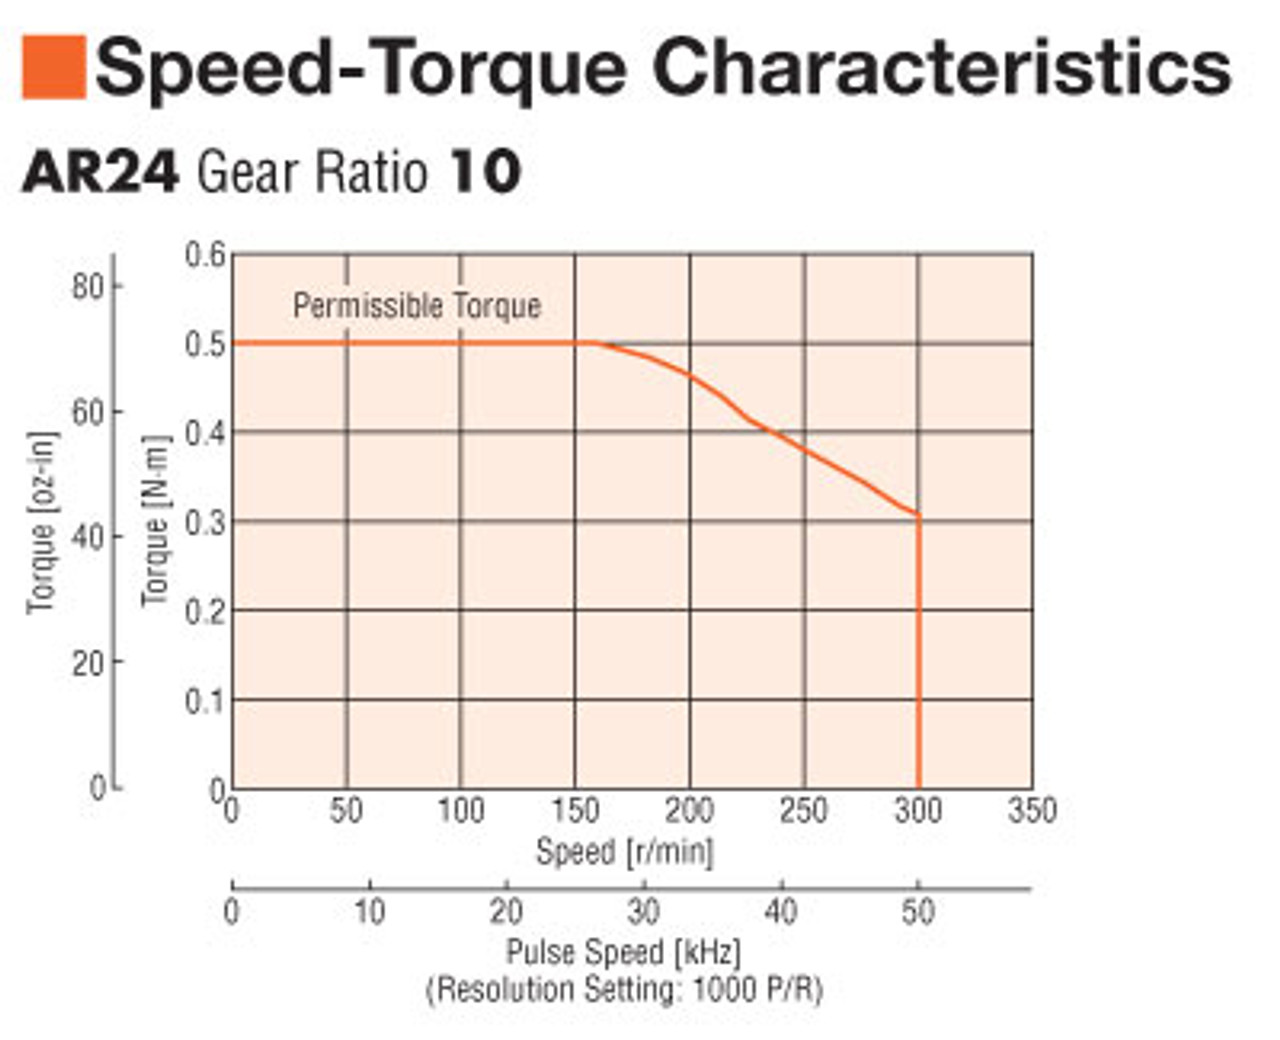 AR24SAKD-PS10-3 - Speed-Torque